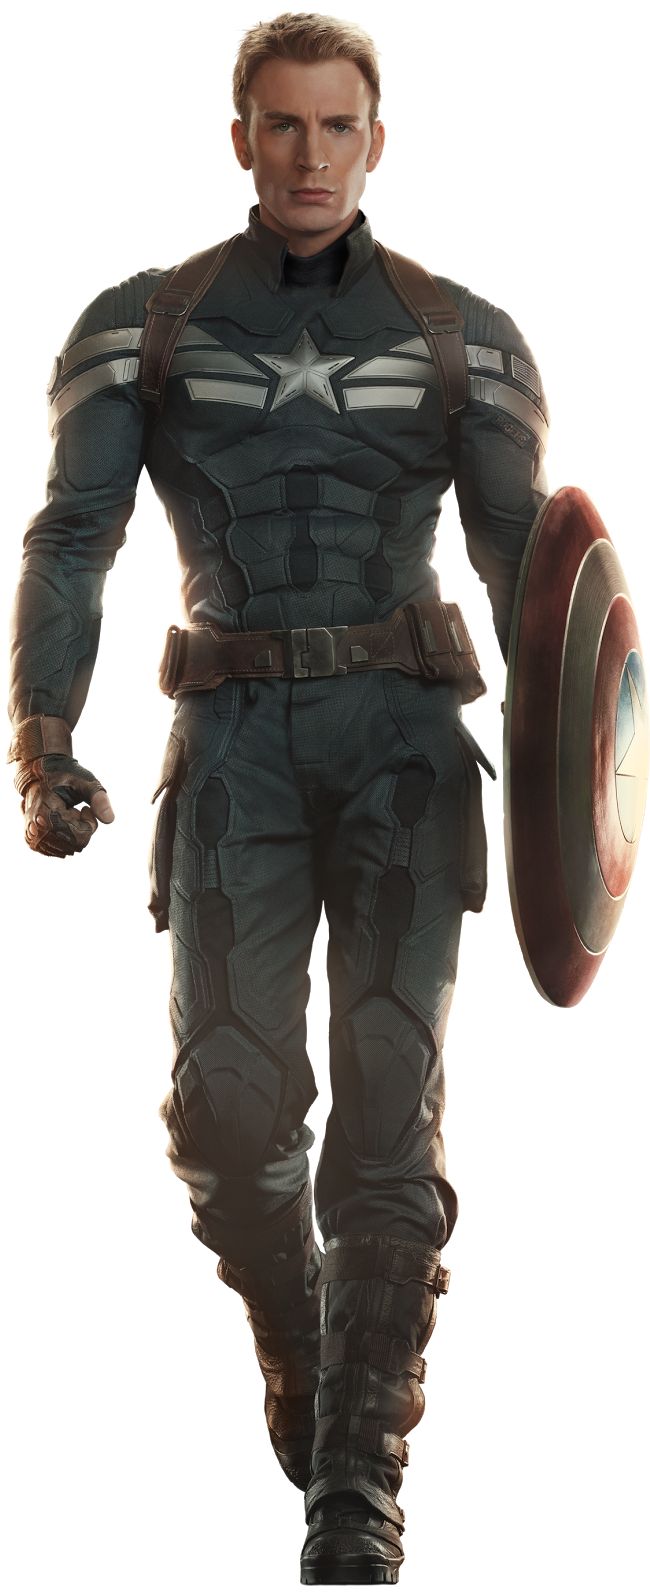 Captain America Png Image Transparent Background - Captain America Chris Evans Standing Clipart (657x1600), Png Download